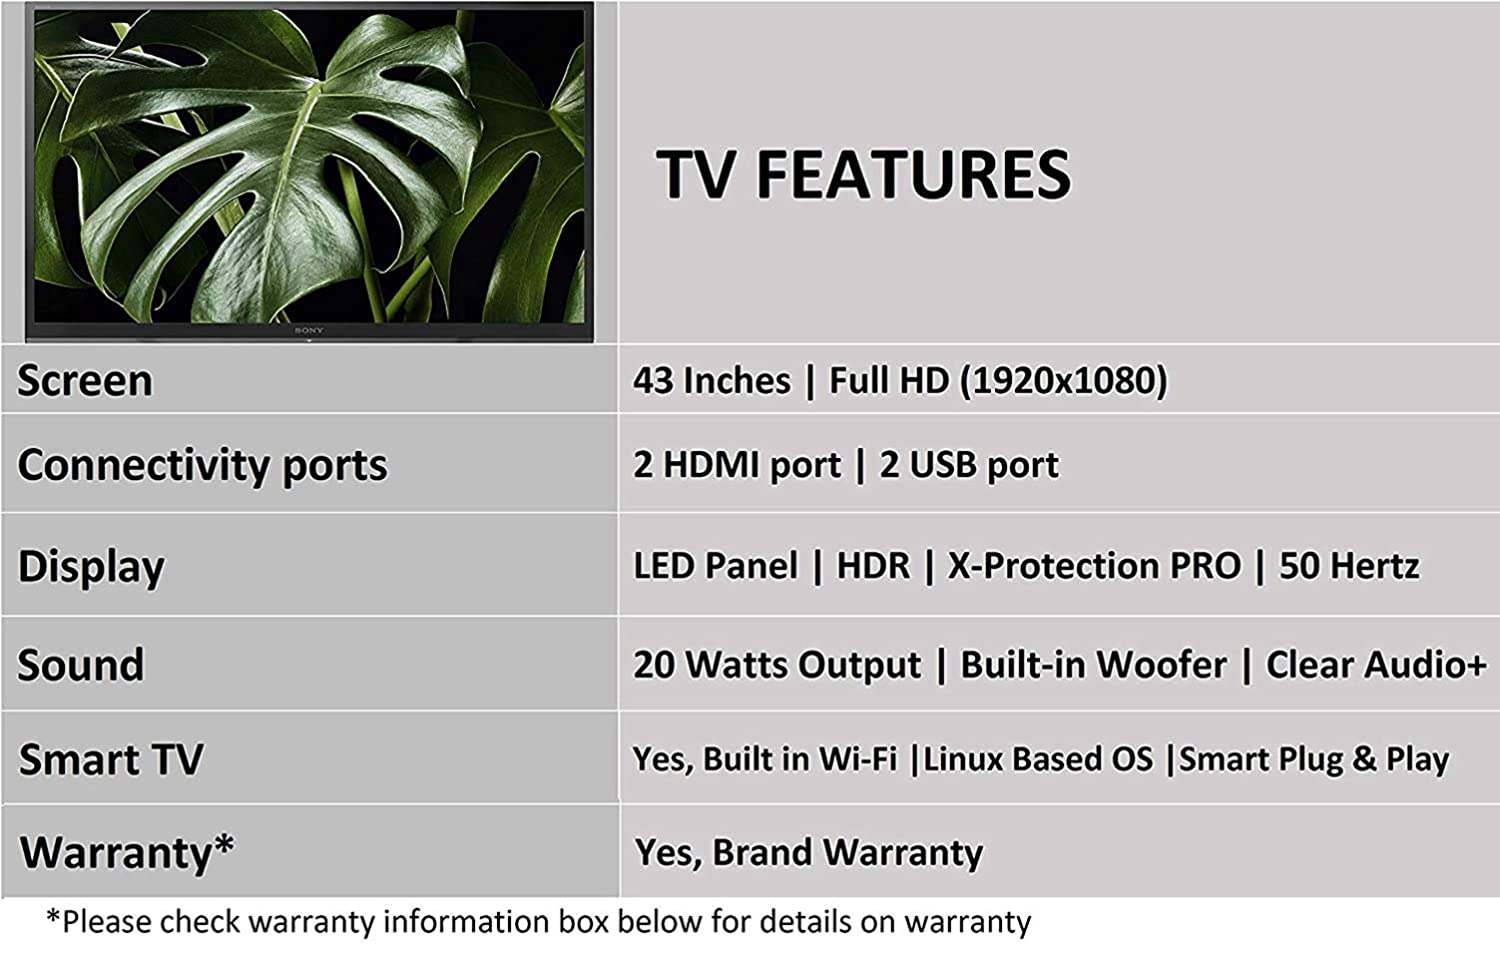 Sony Bravia 108 cm (43 inches) Full HD LED Smart TV KLV-43W672G